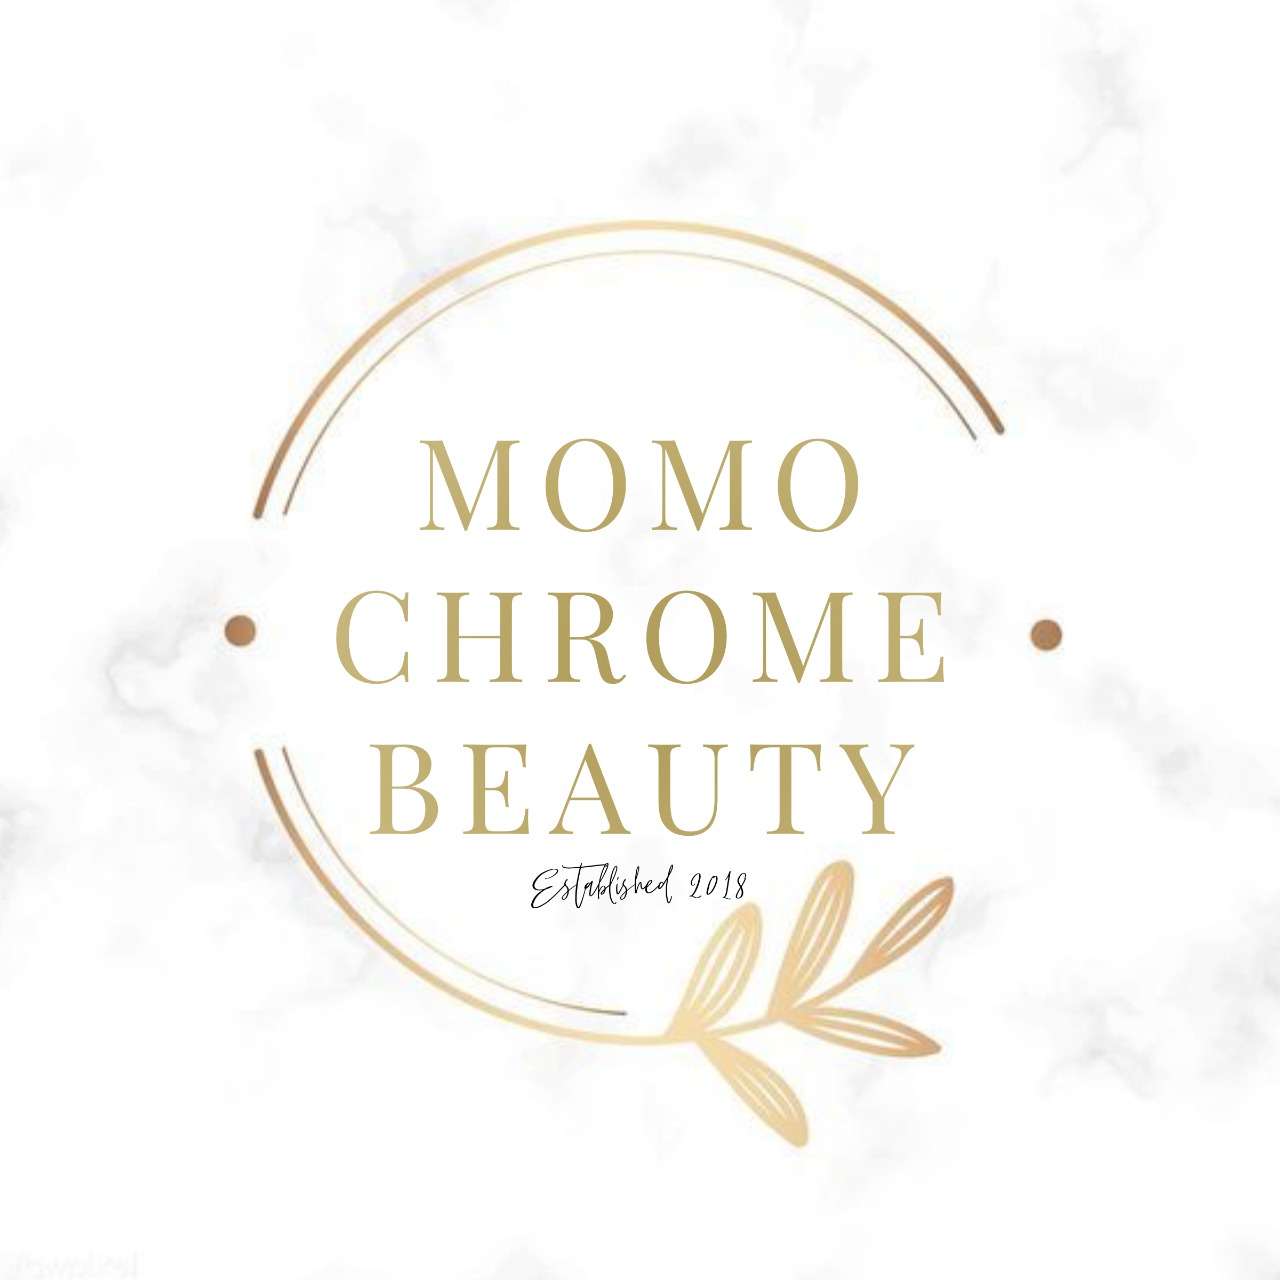 Momo Chrome Beauty Clinic